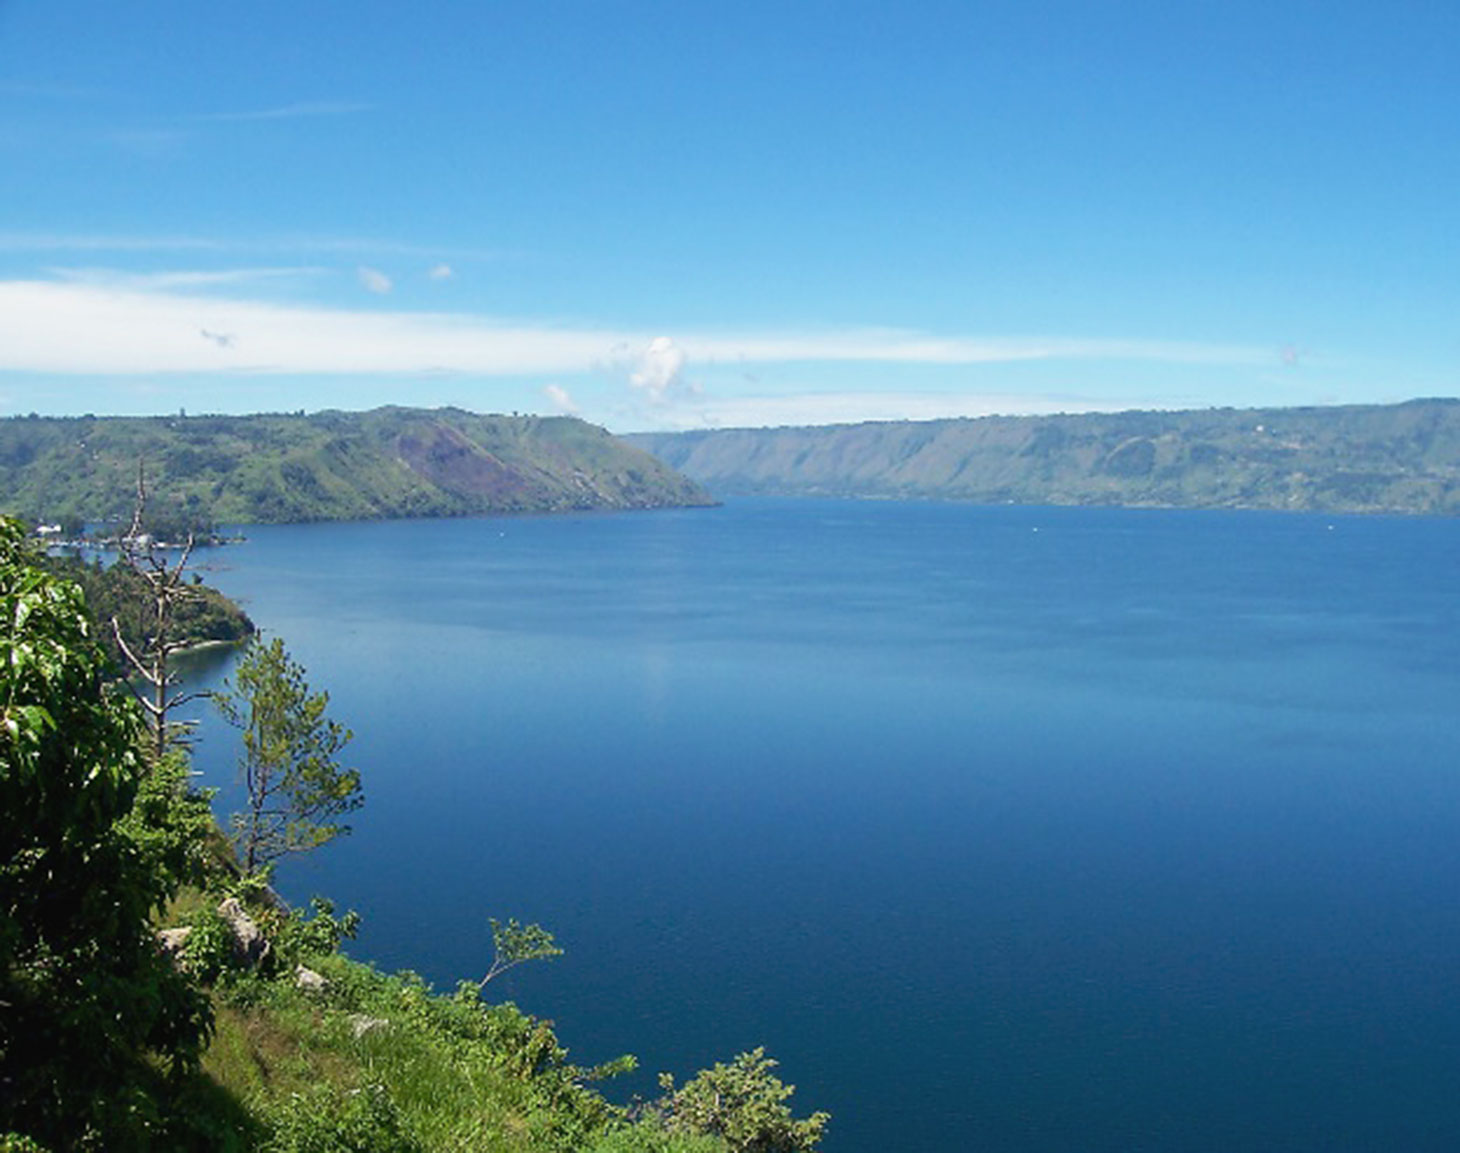 Photo 1: Lake Toba (Near the Tourist Destination Parapat)